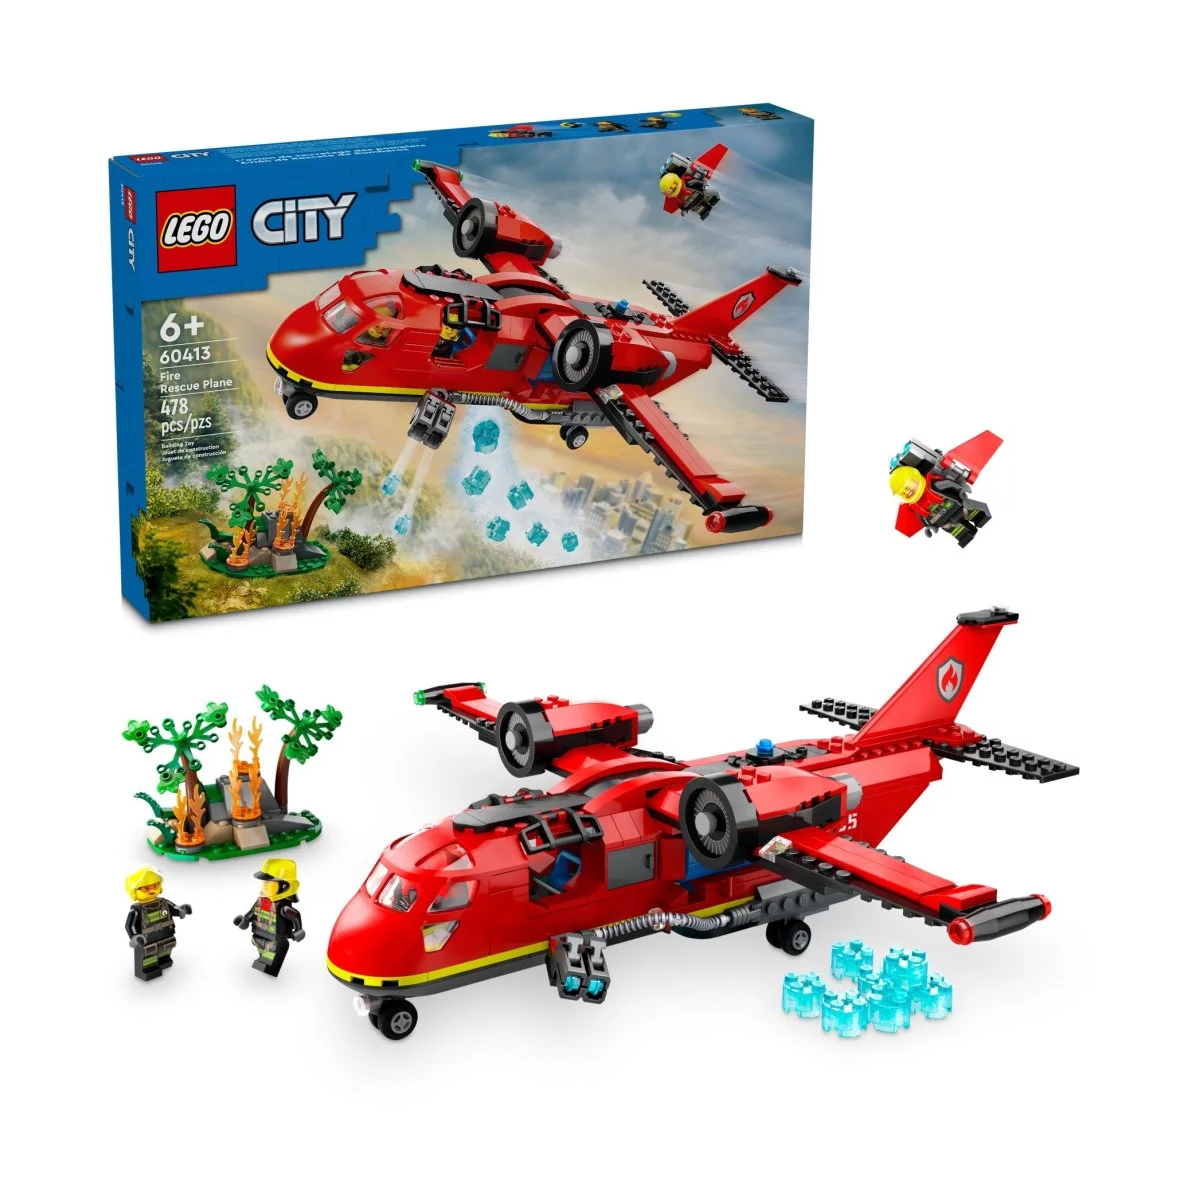 Конструктор Lego City Fire Rescue Plane 60413, 478 деталей конструктор lego city fire rescue helicopter 60411 85 деталей